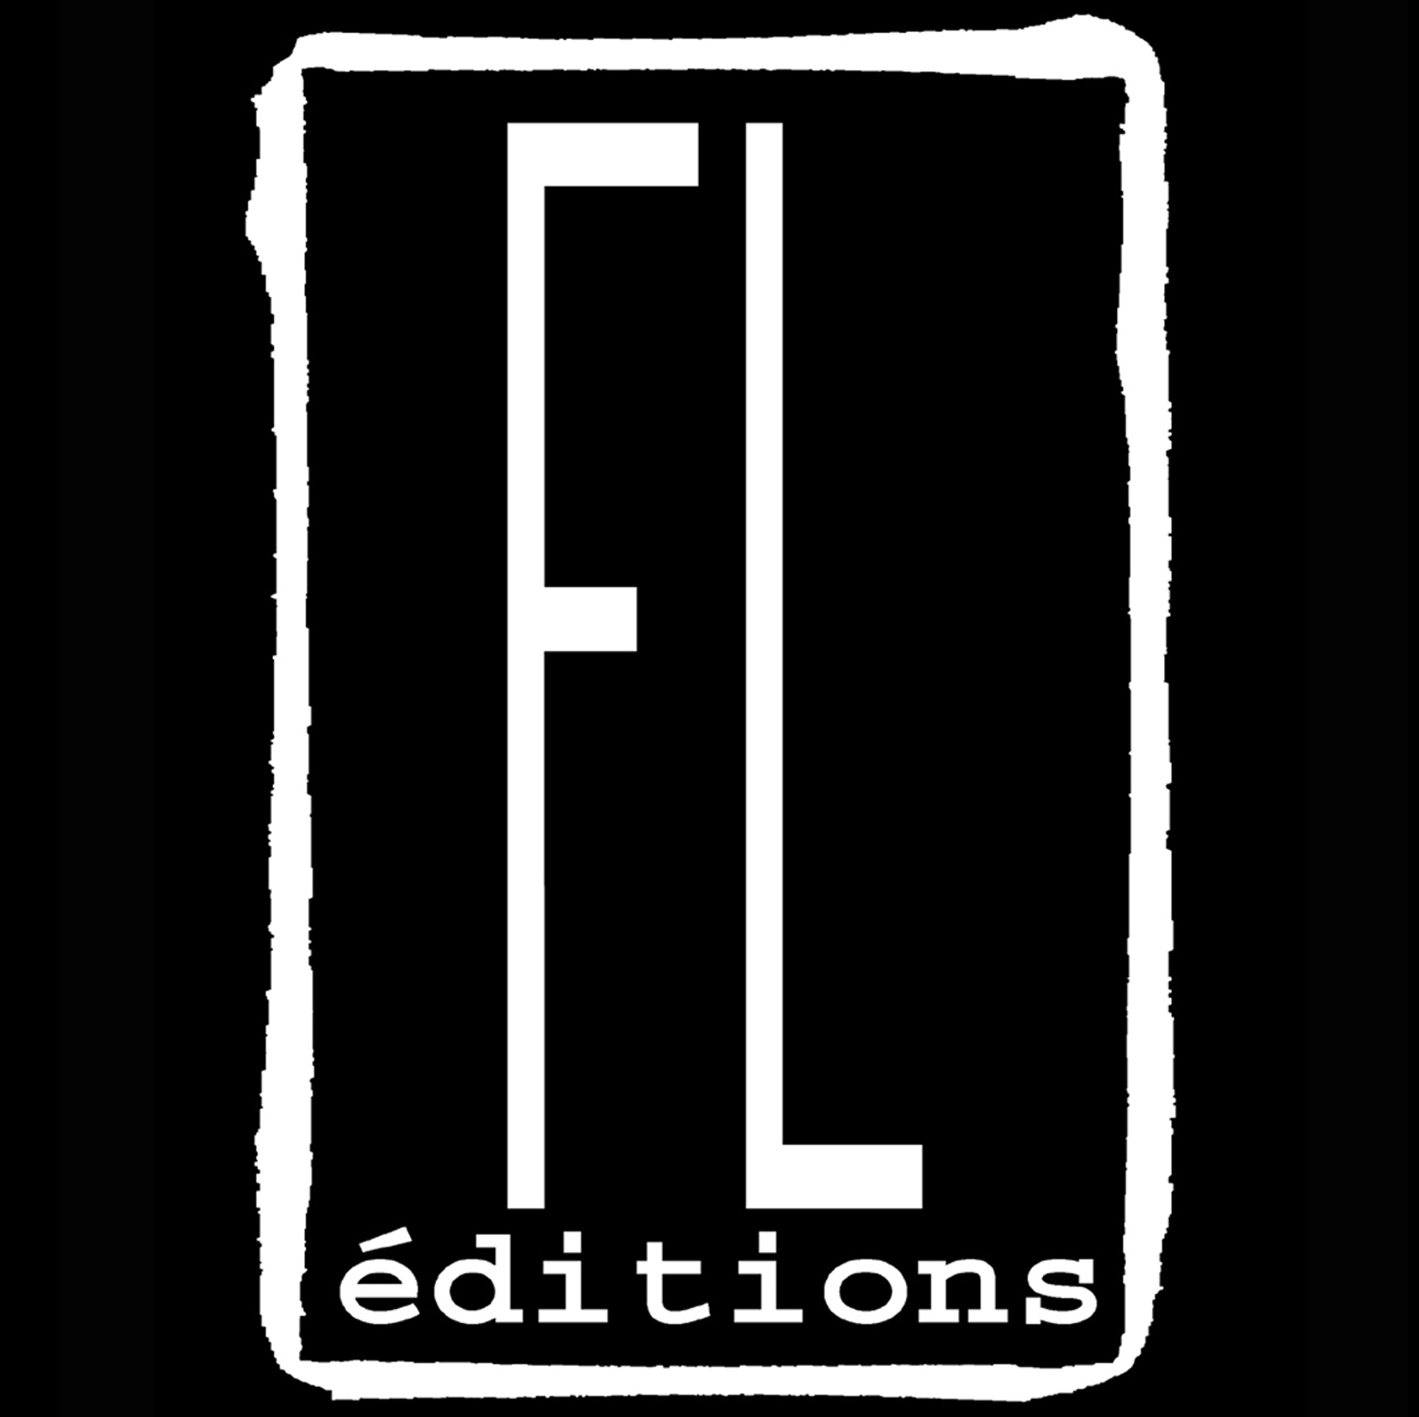 logo FL éditions